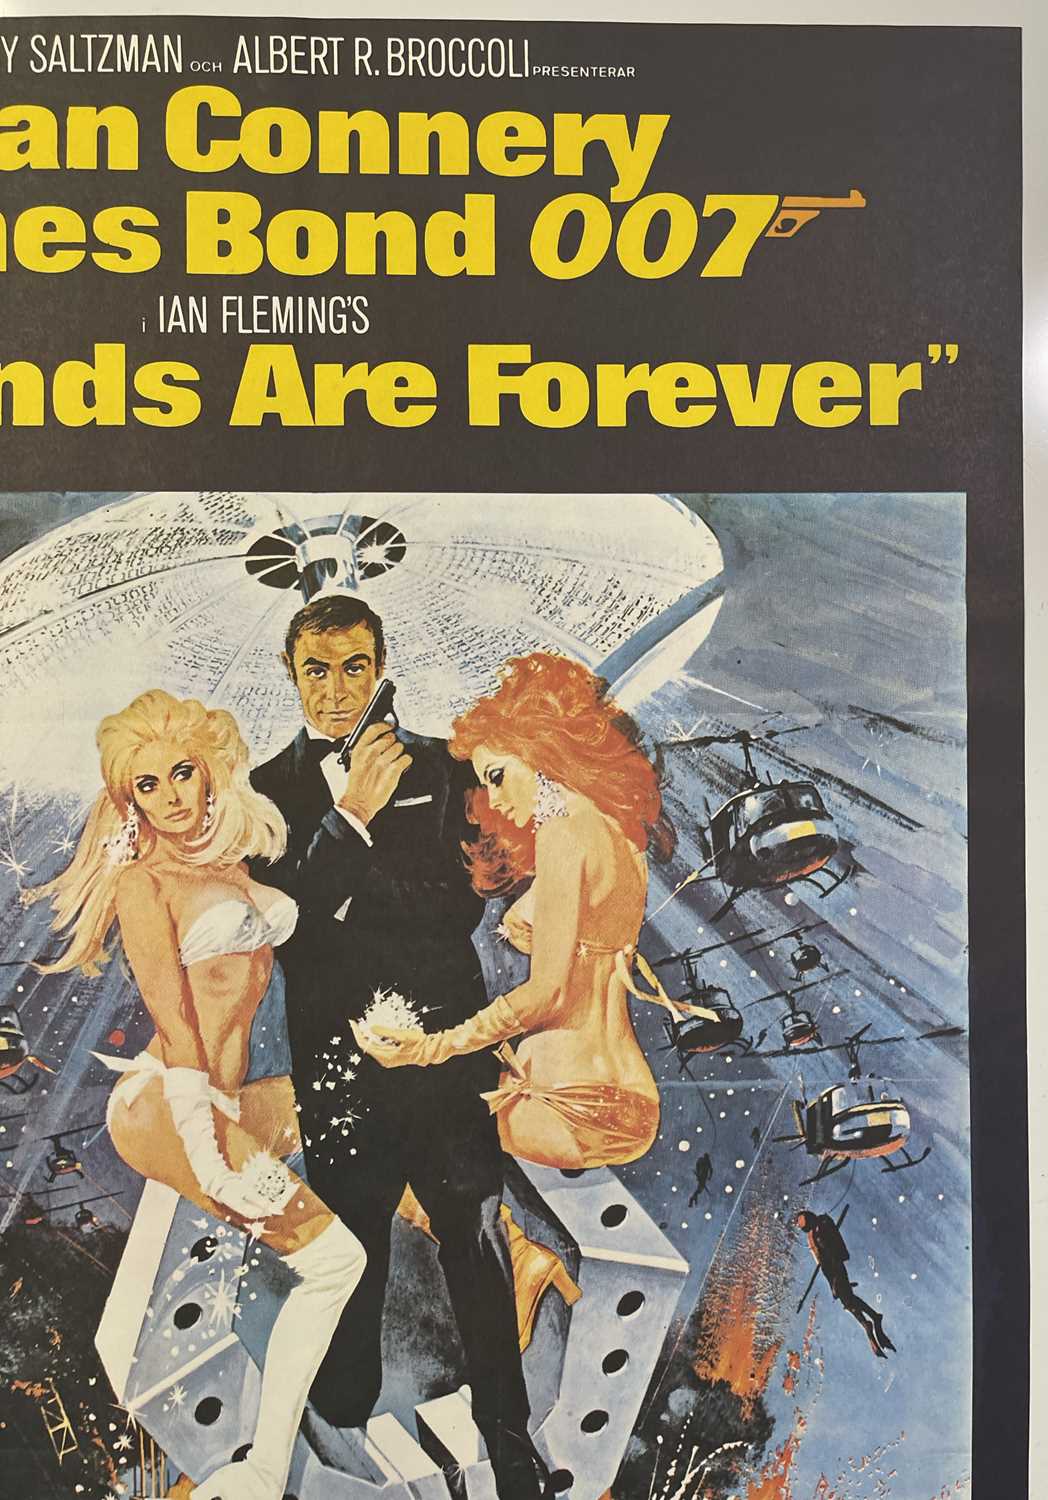 JAMES BOND - DIAMONDS ARE FOREVER (1971) - C 1982 SWEDISH REISSUE. - Image 5 of 6